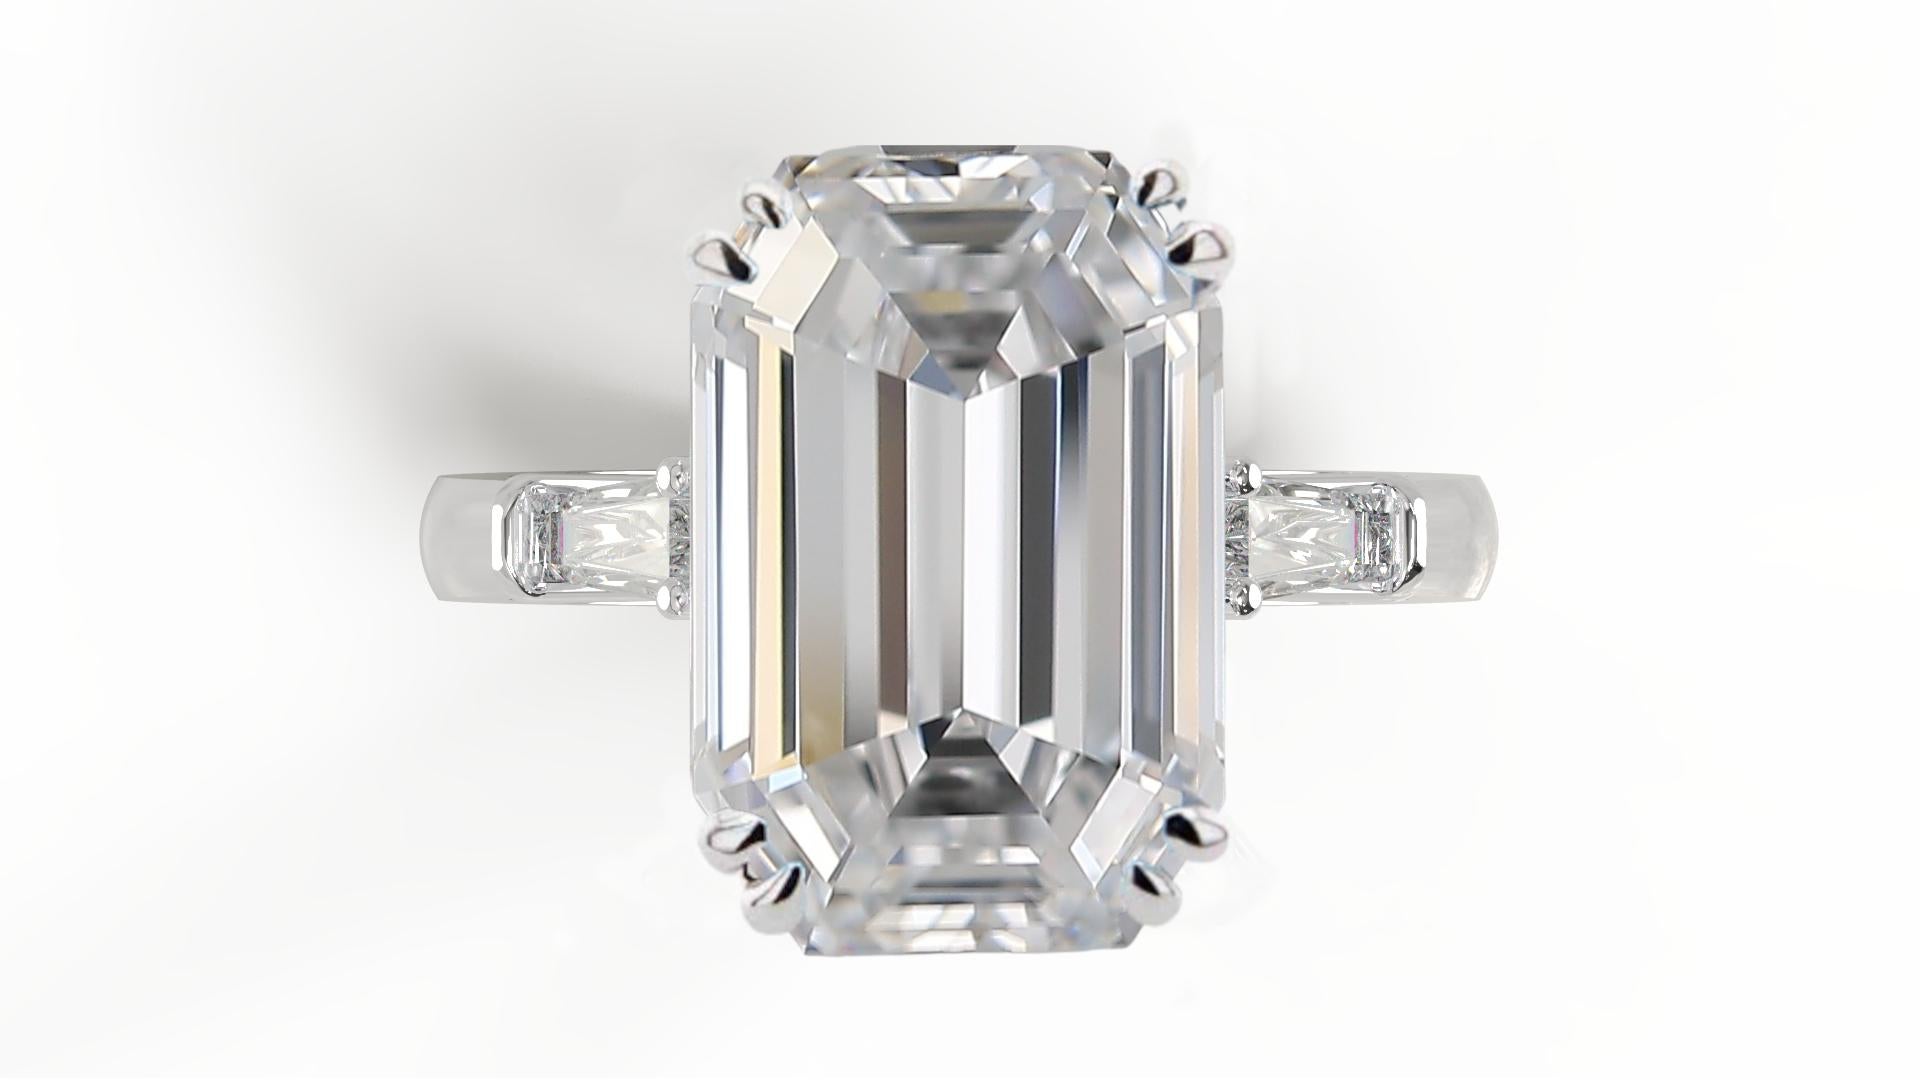 3.5 carat emerald cut diamond ring